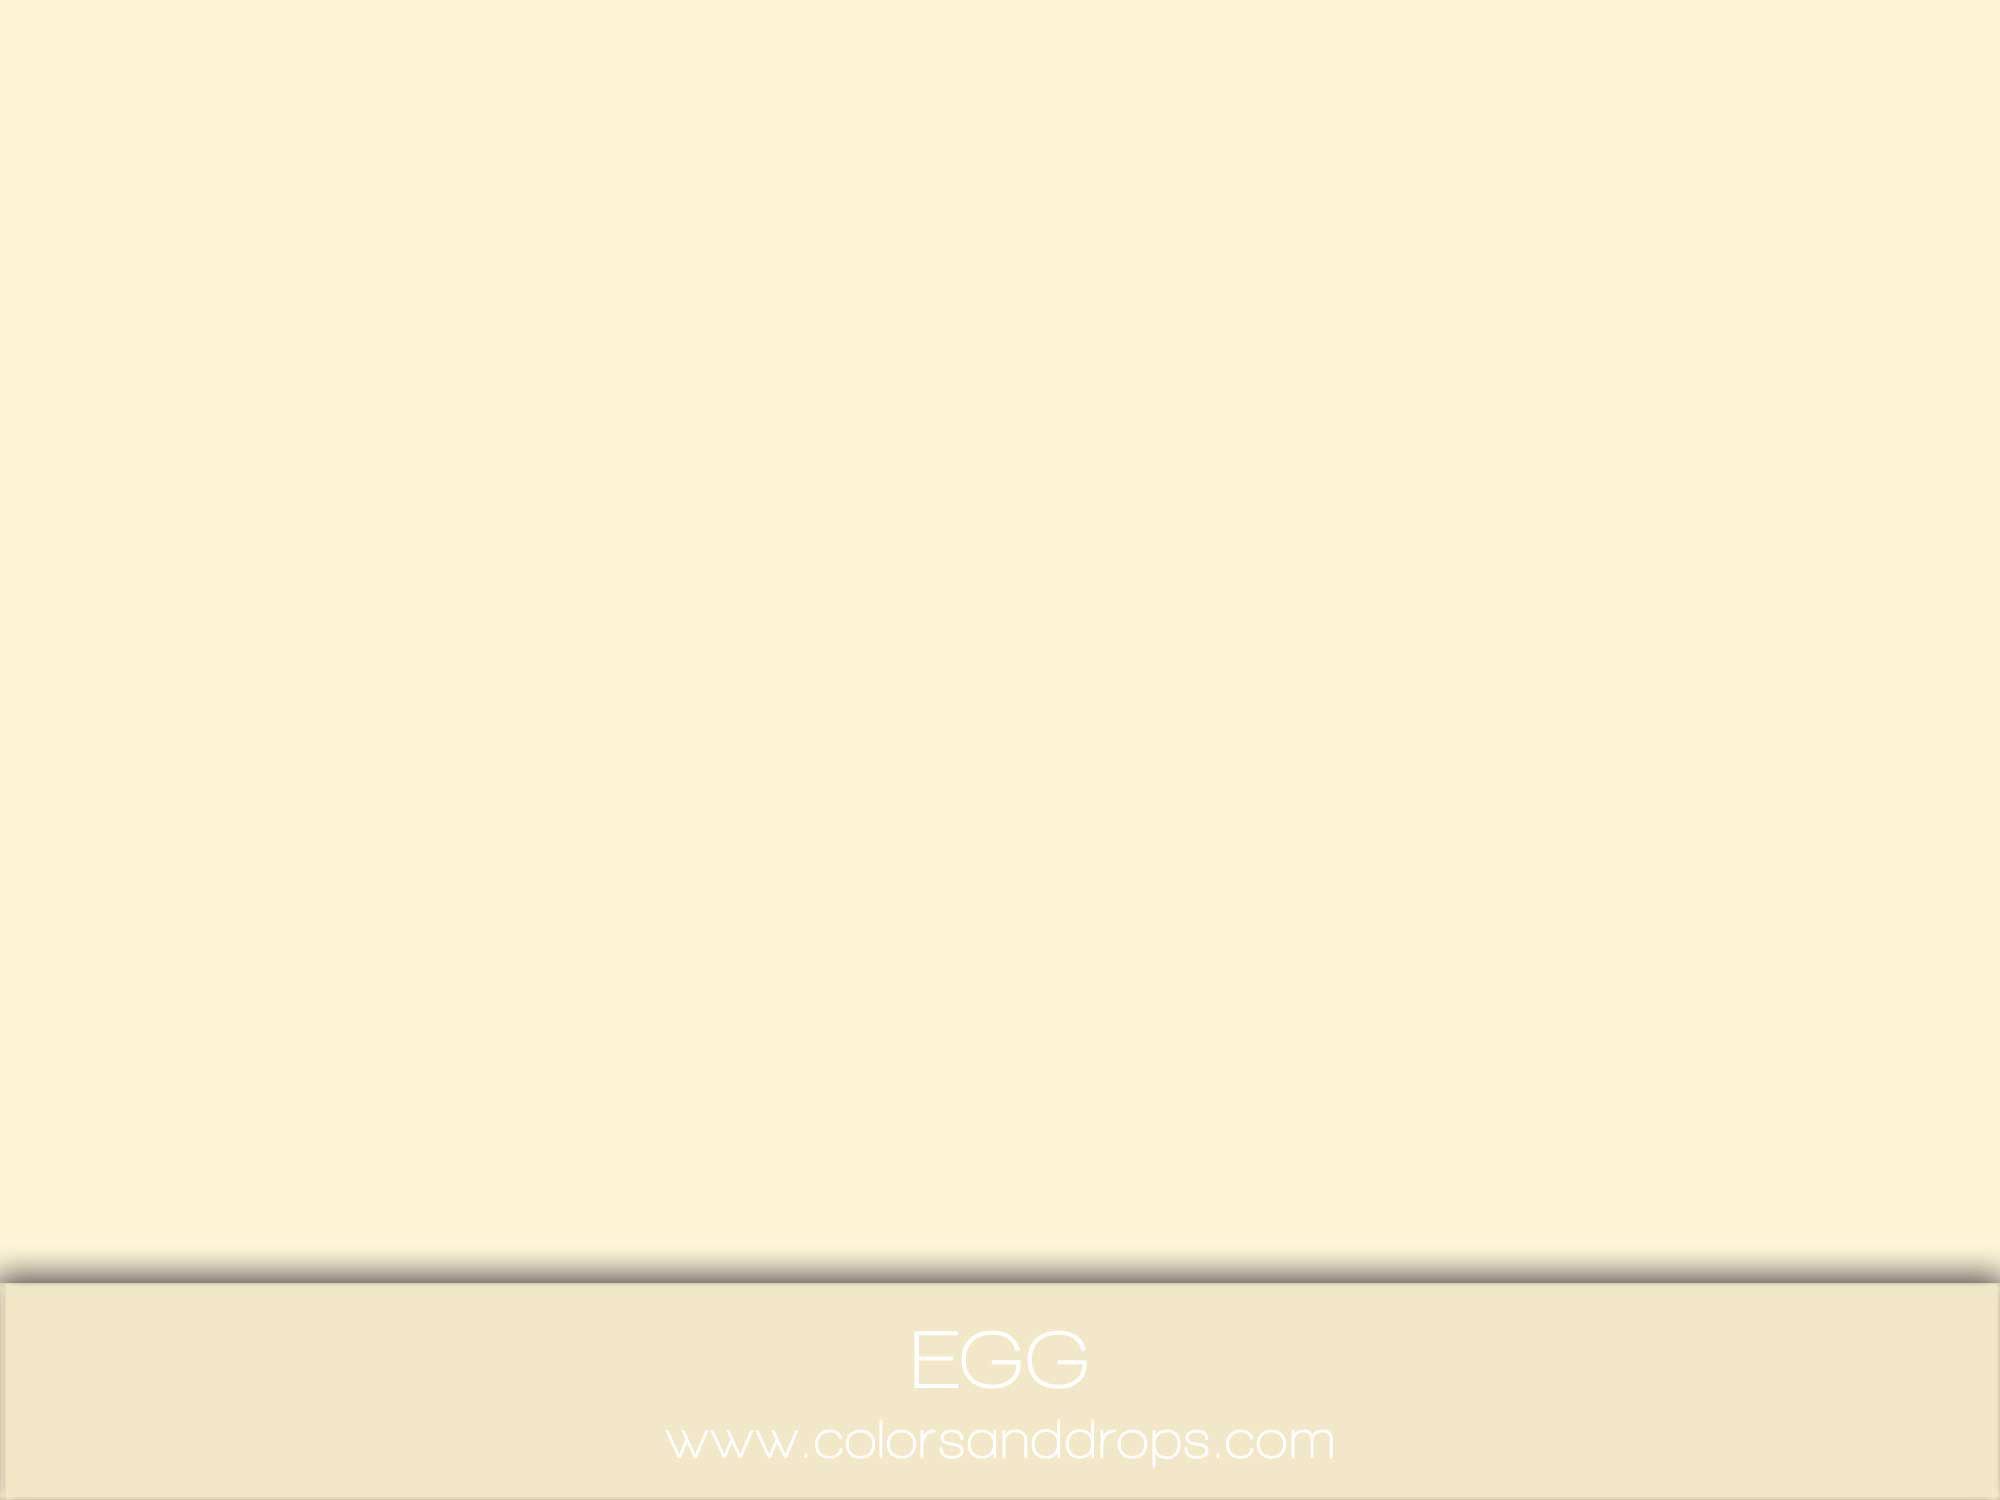 Fundo Egg 150x200